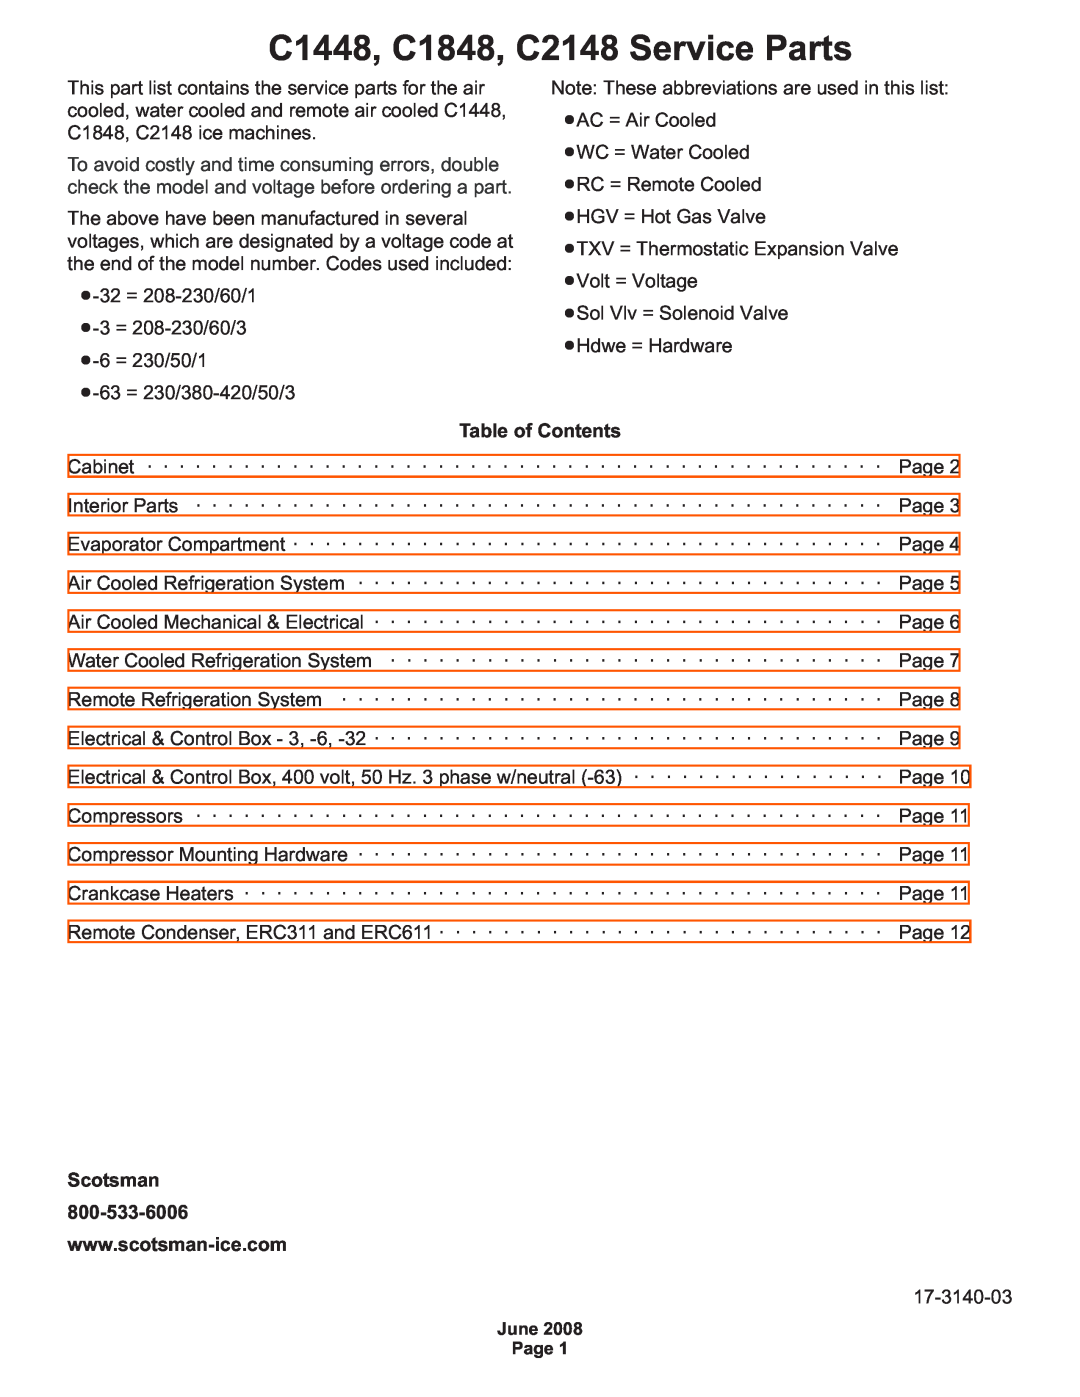 Scotsman Ice manual C1448, C1848, C2148 Service Parts, Table of Contents, Scotsman 